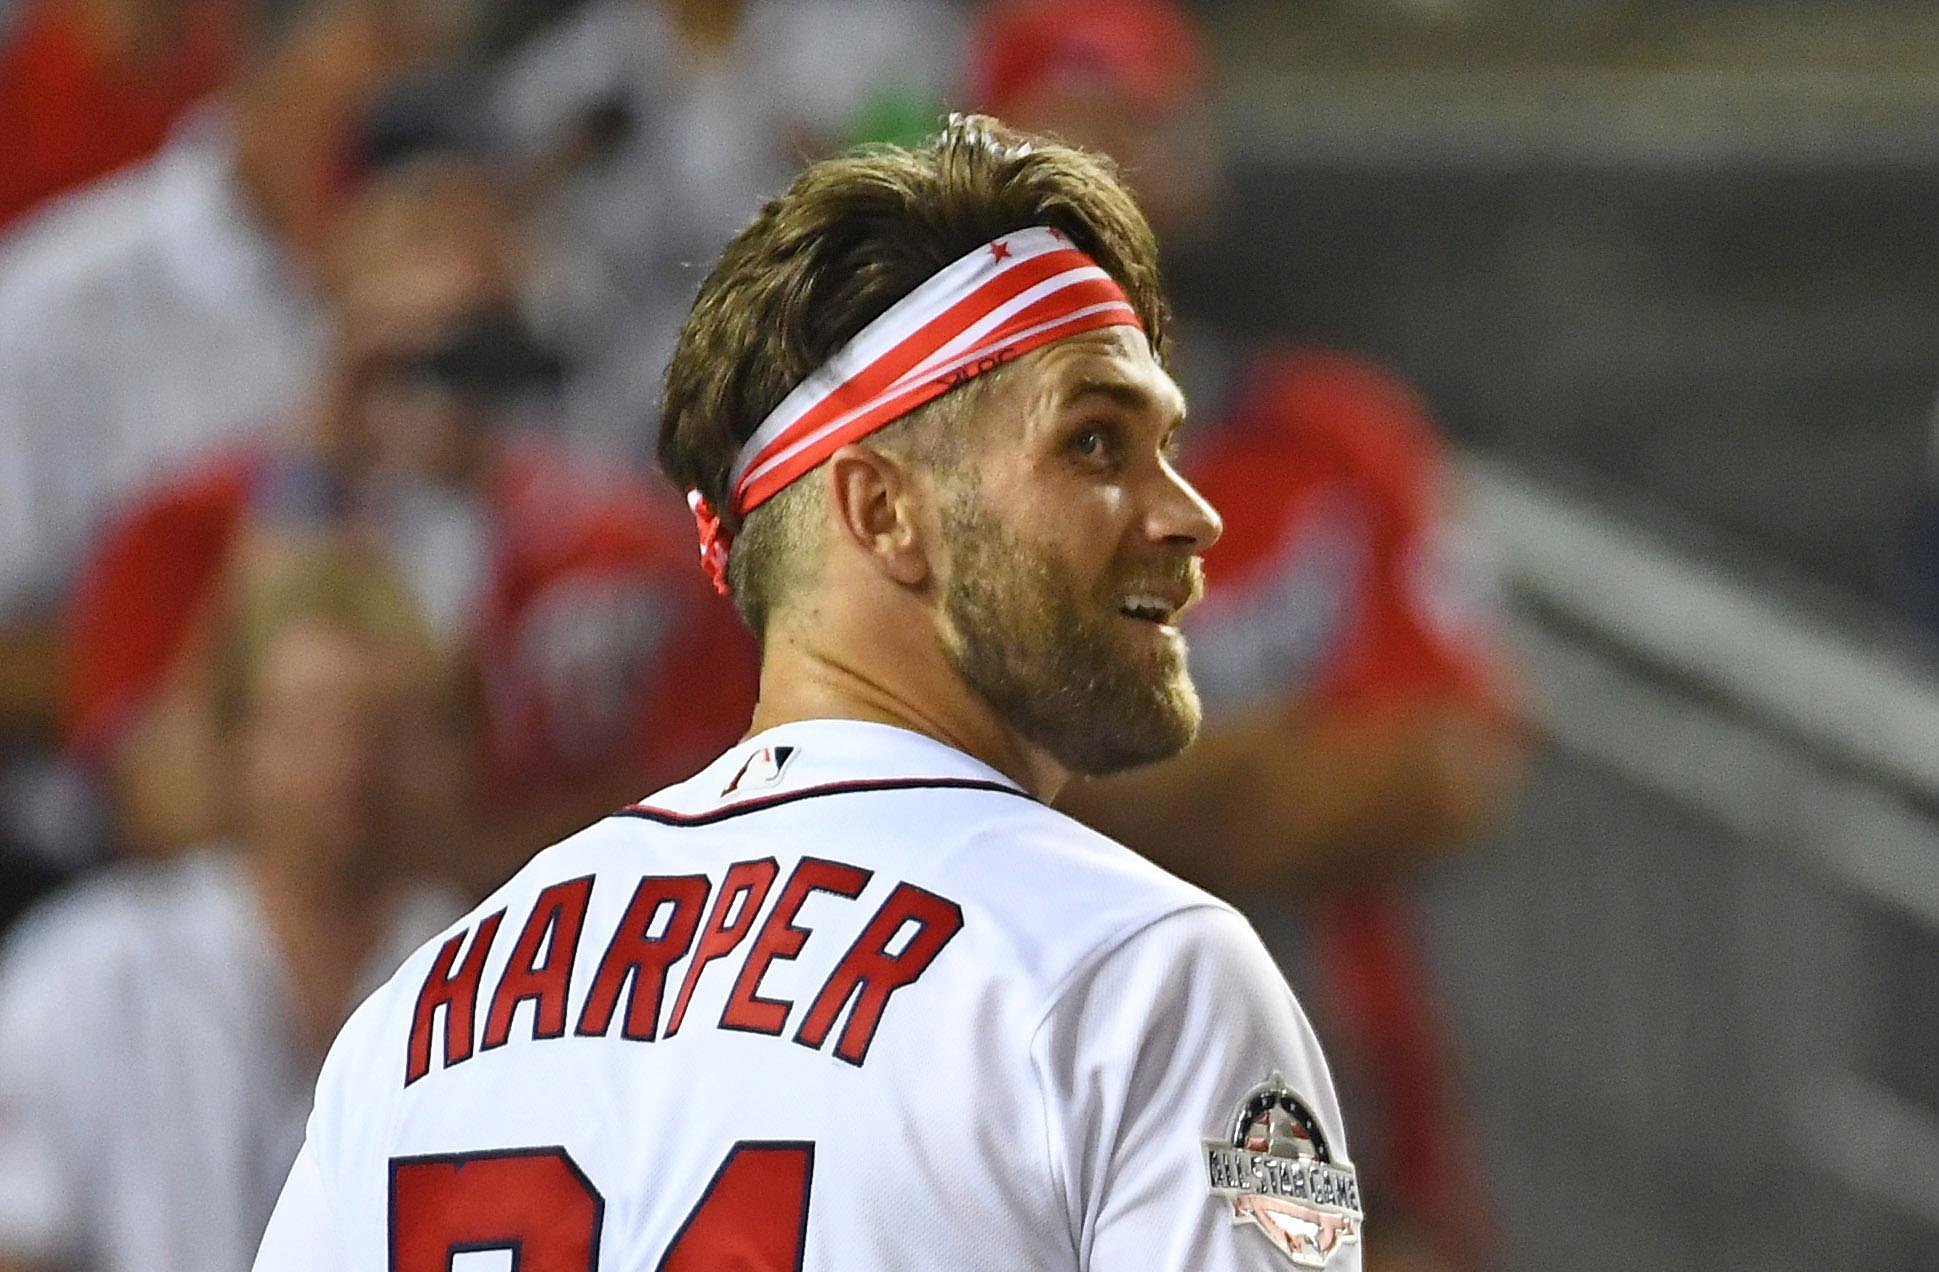 Bryce Harper says he hopes Las Vegas lands baseball team